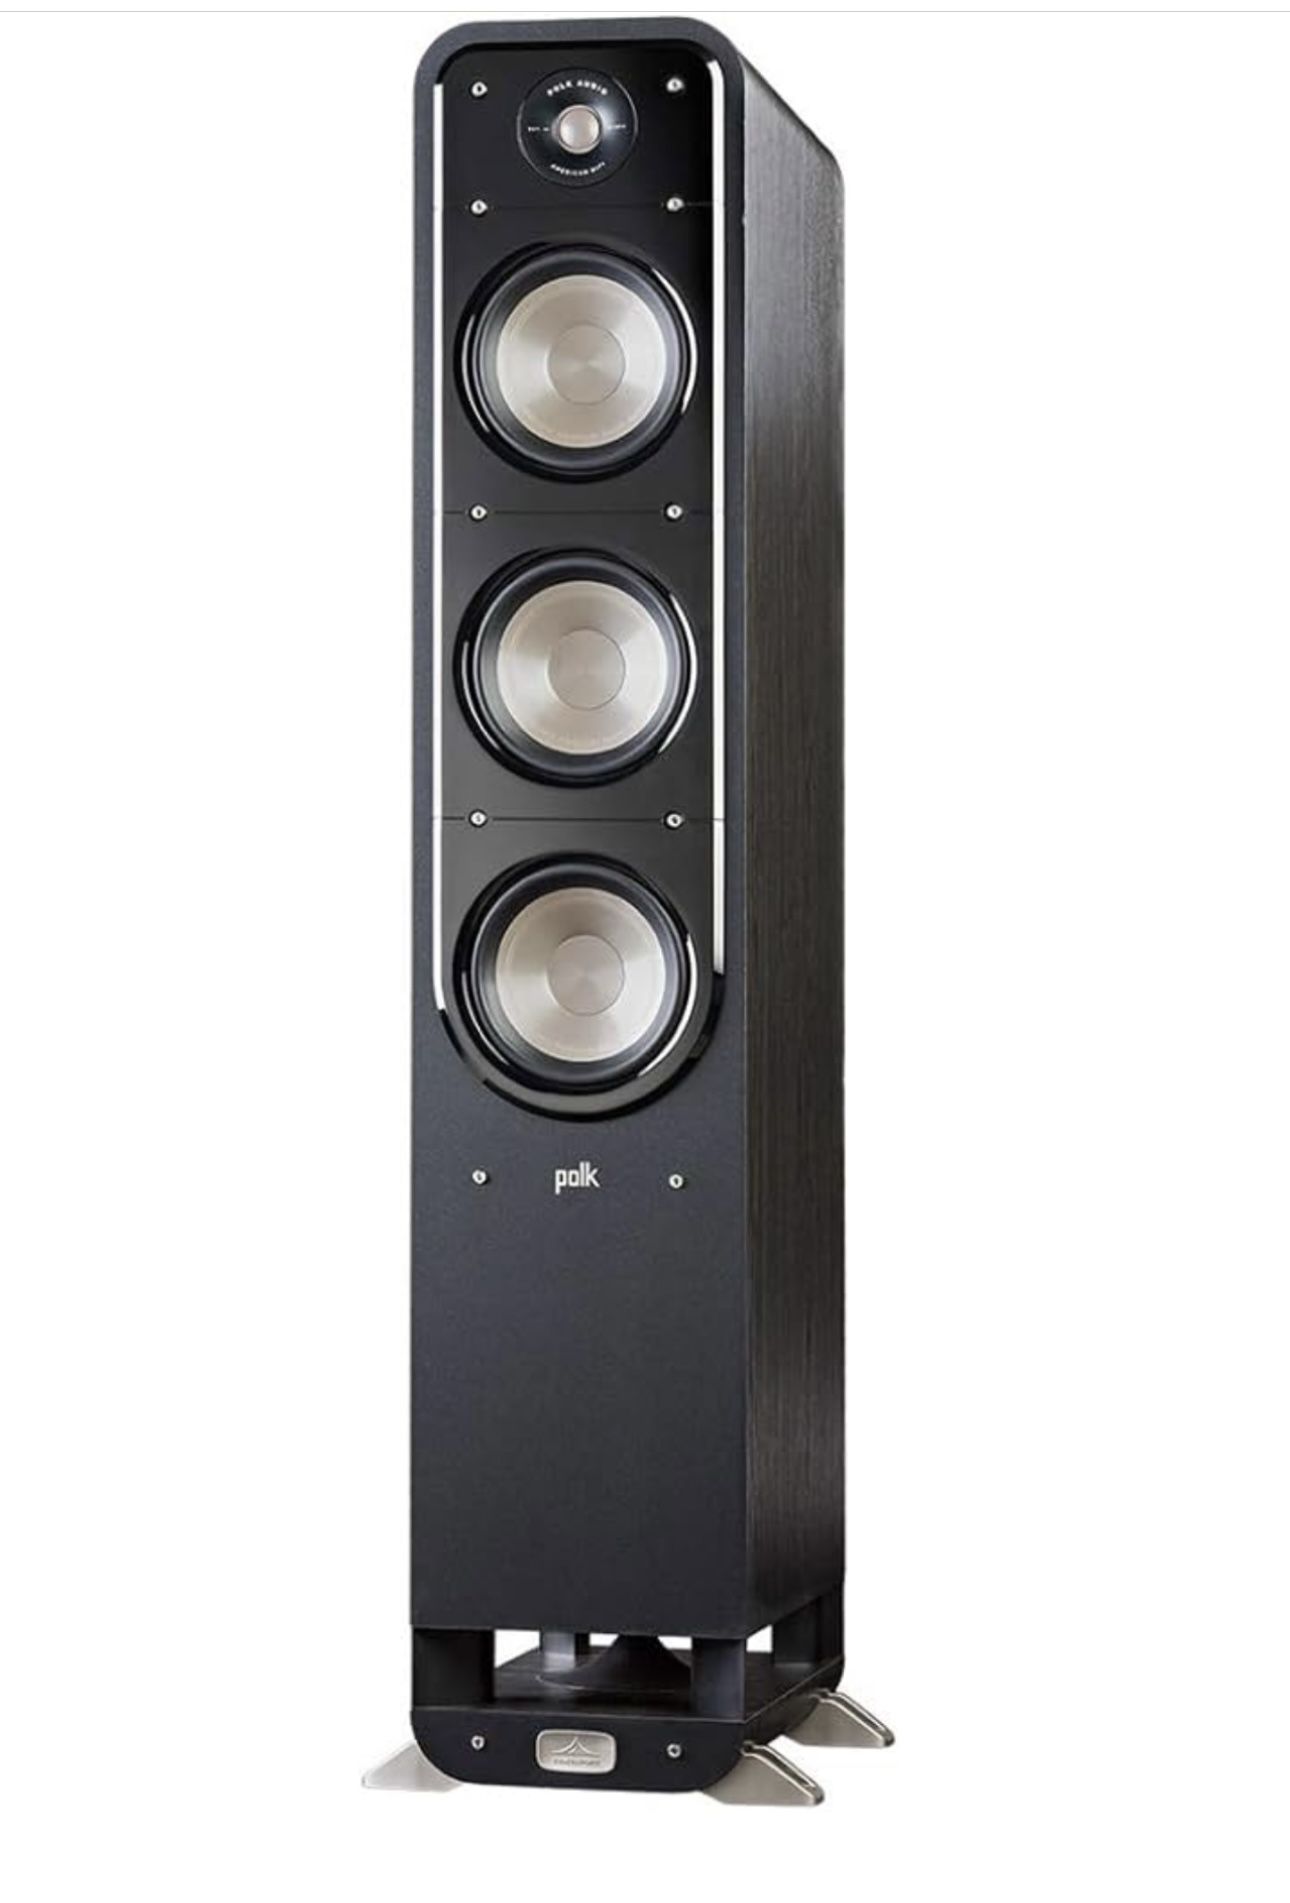 Polk Audio - Polk Signature Series S60 Floor Standing Speaker - American HiFi Surround Sound for TV, Music, and Movies - Black.See more im